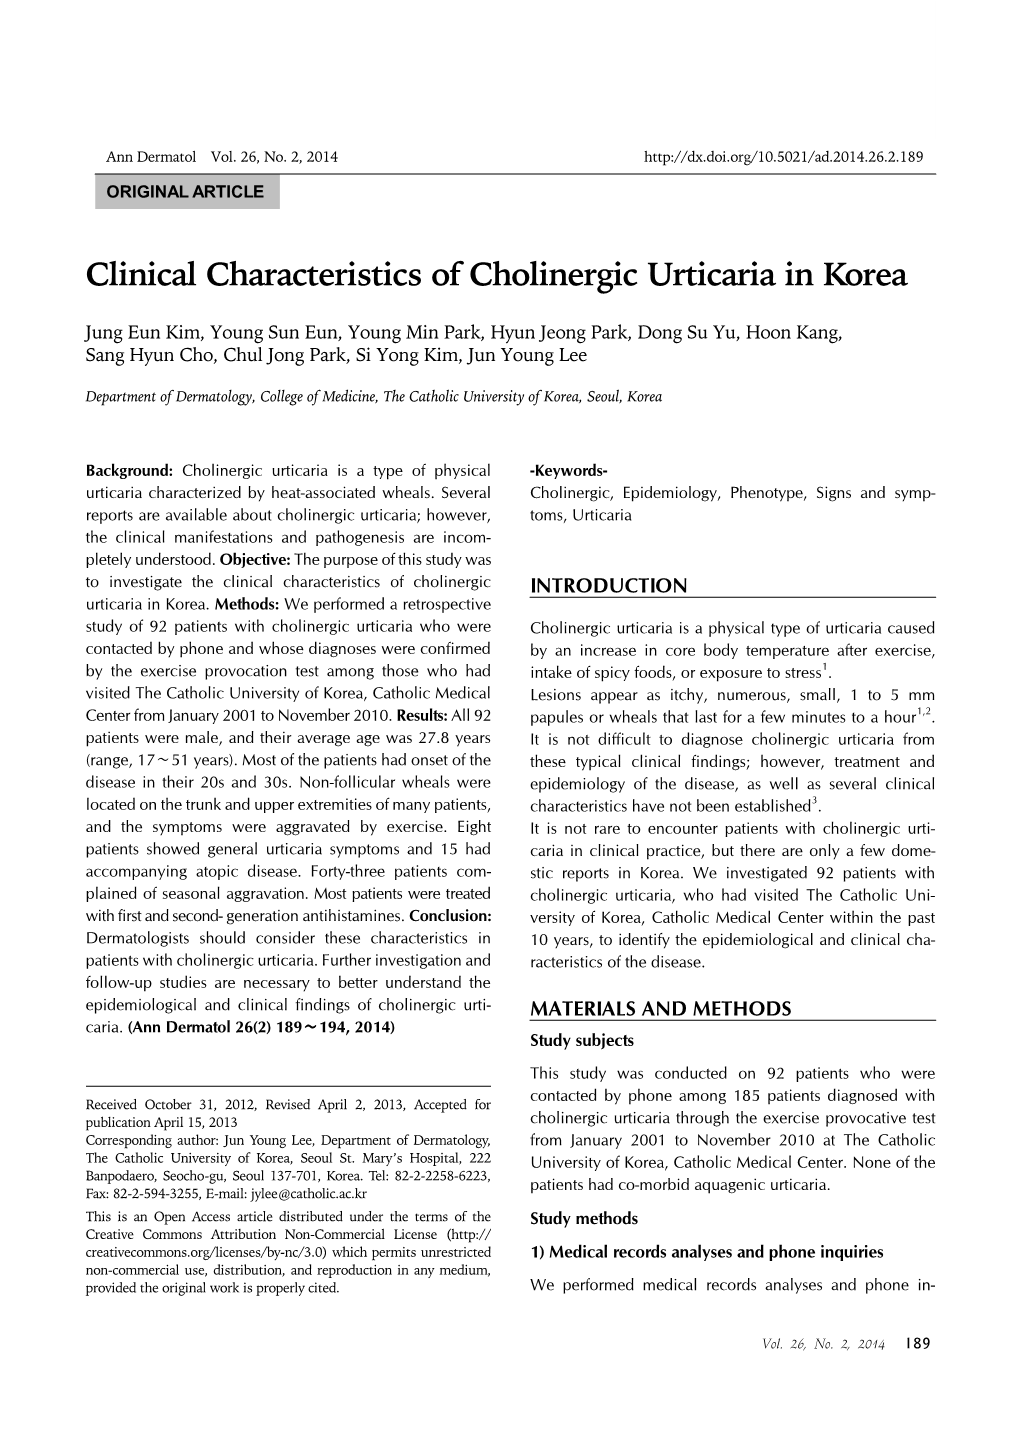 Clinical Characteristics of Cholinergic Urticaria in Korea